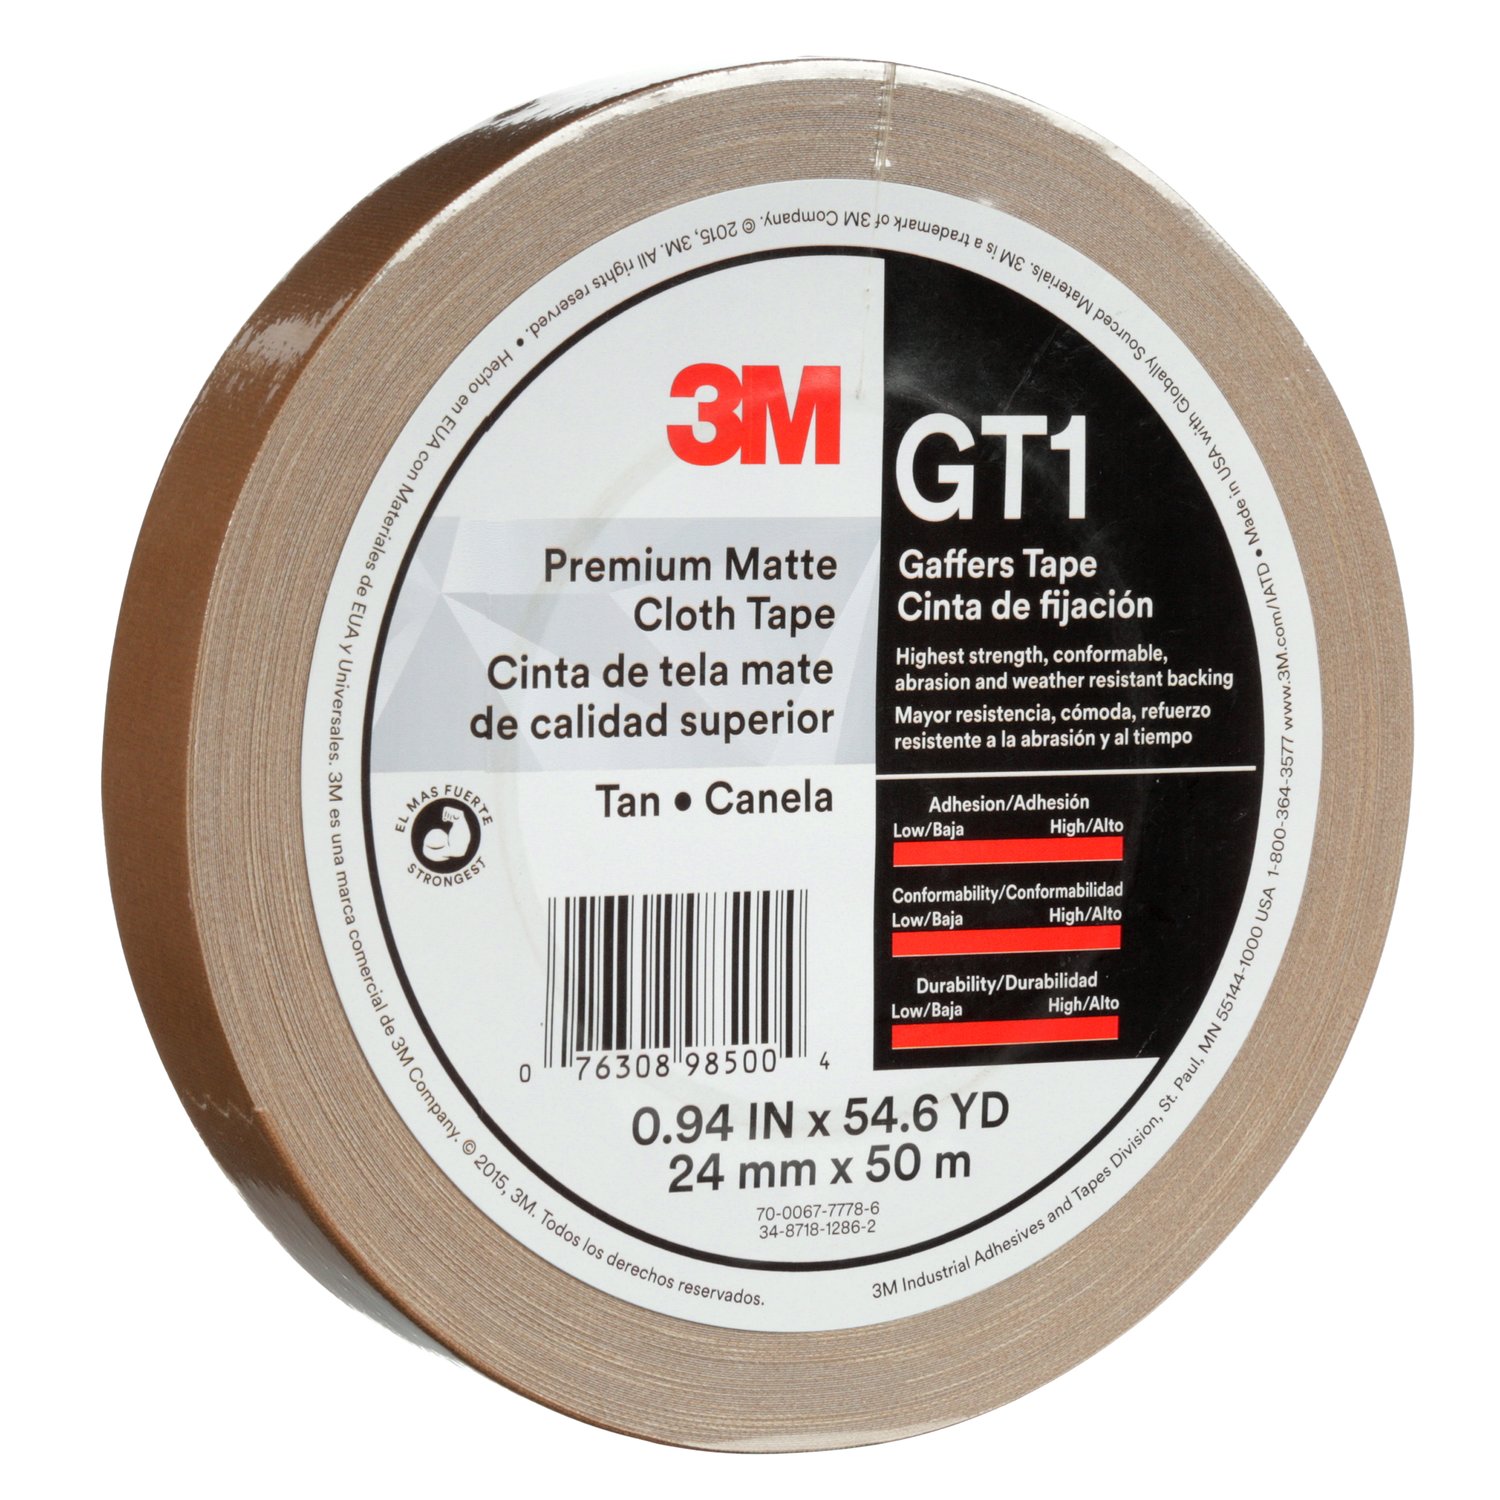 7010336128 - 3M Premium Matte Cloth (Gaffers) Tape GT1, Tan, 24 mm x 50 m, 11 mil,
48/Case